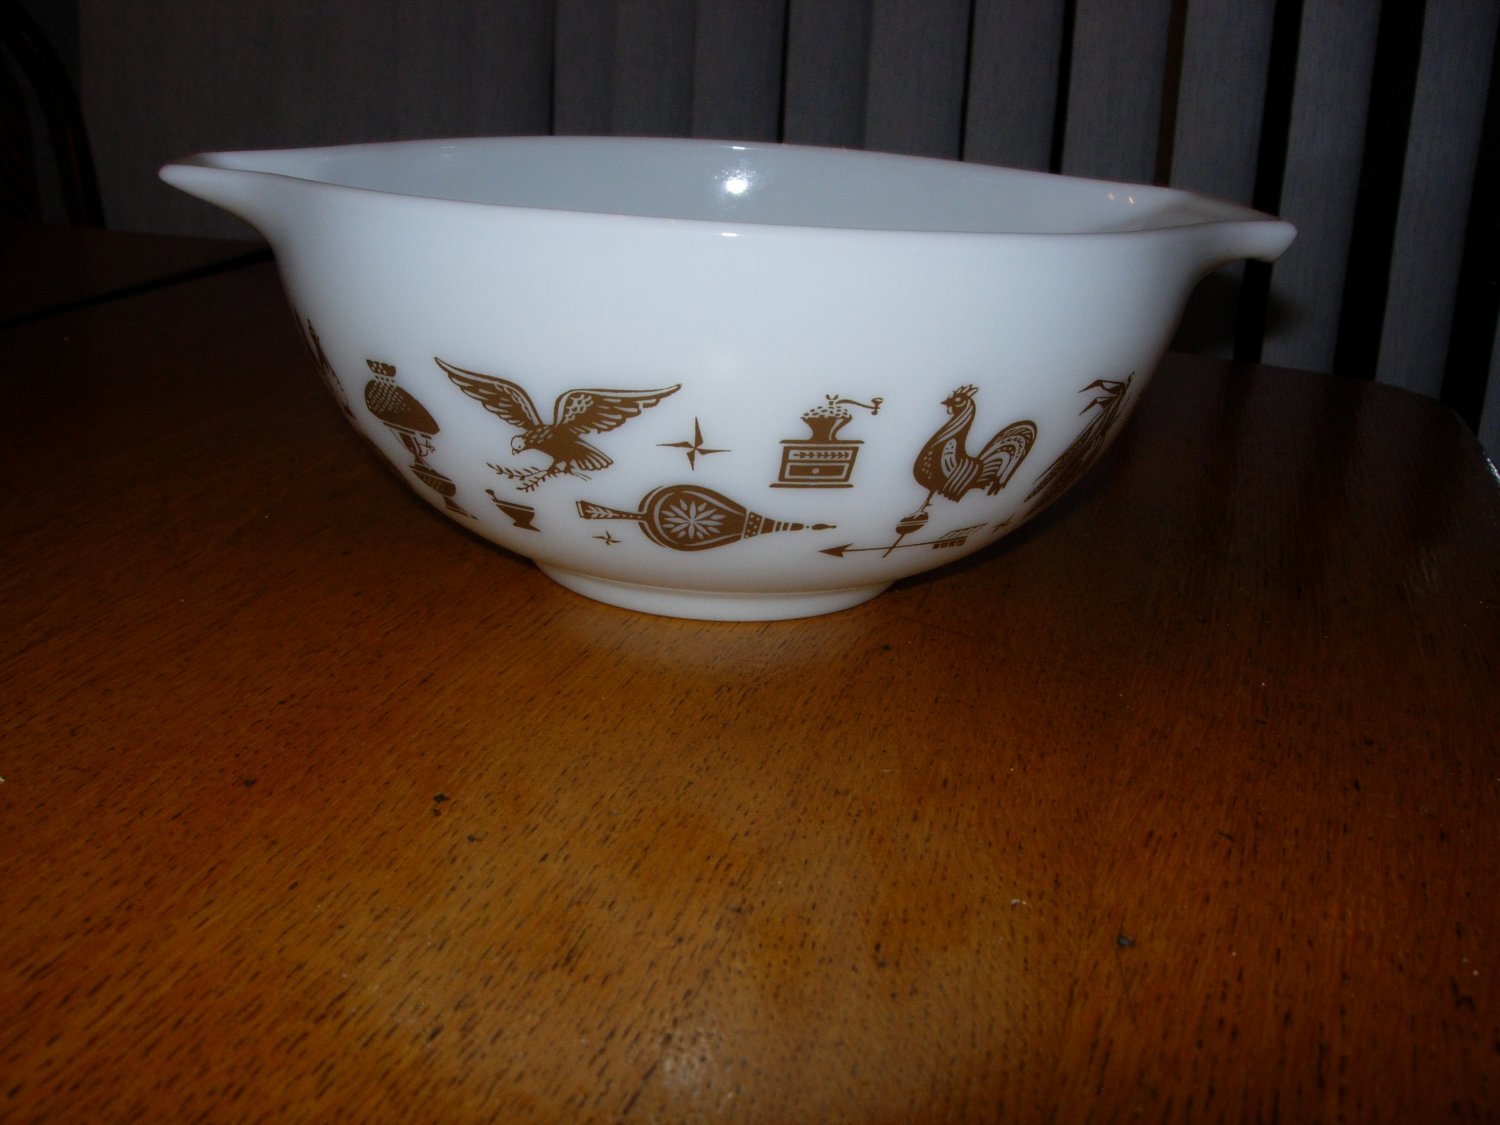 Pyrex #443  2.5qt. Early American Cinderella Mixing Bowl